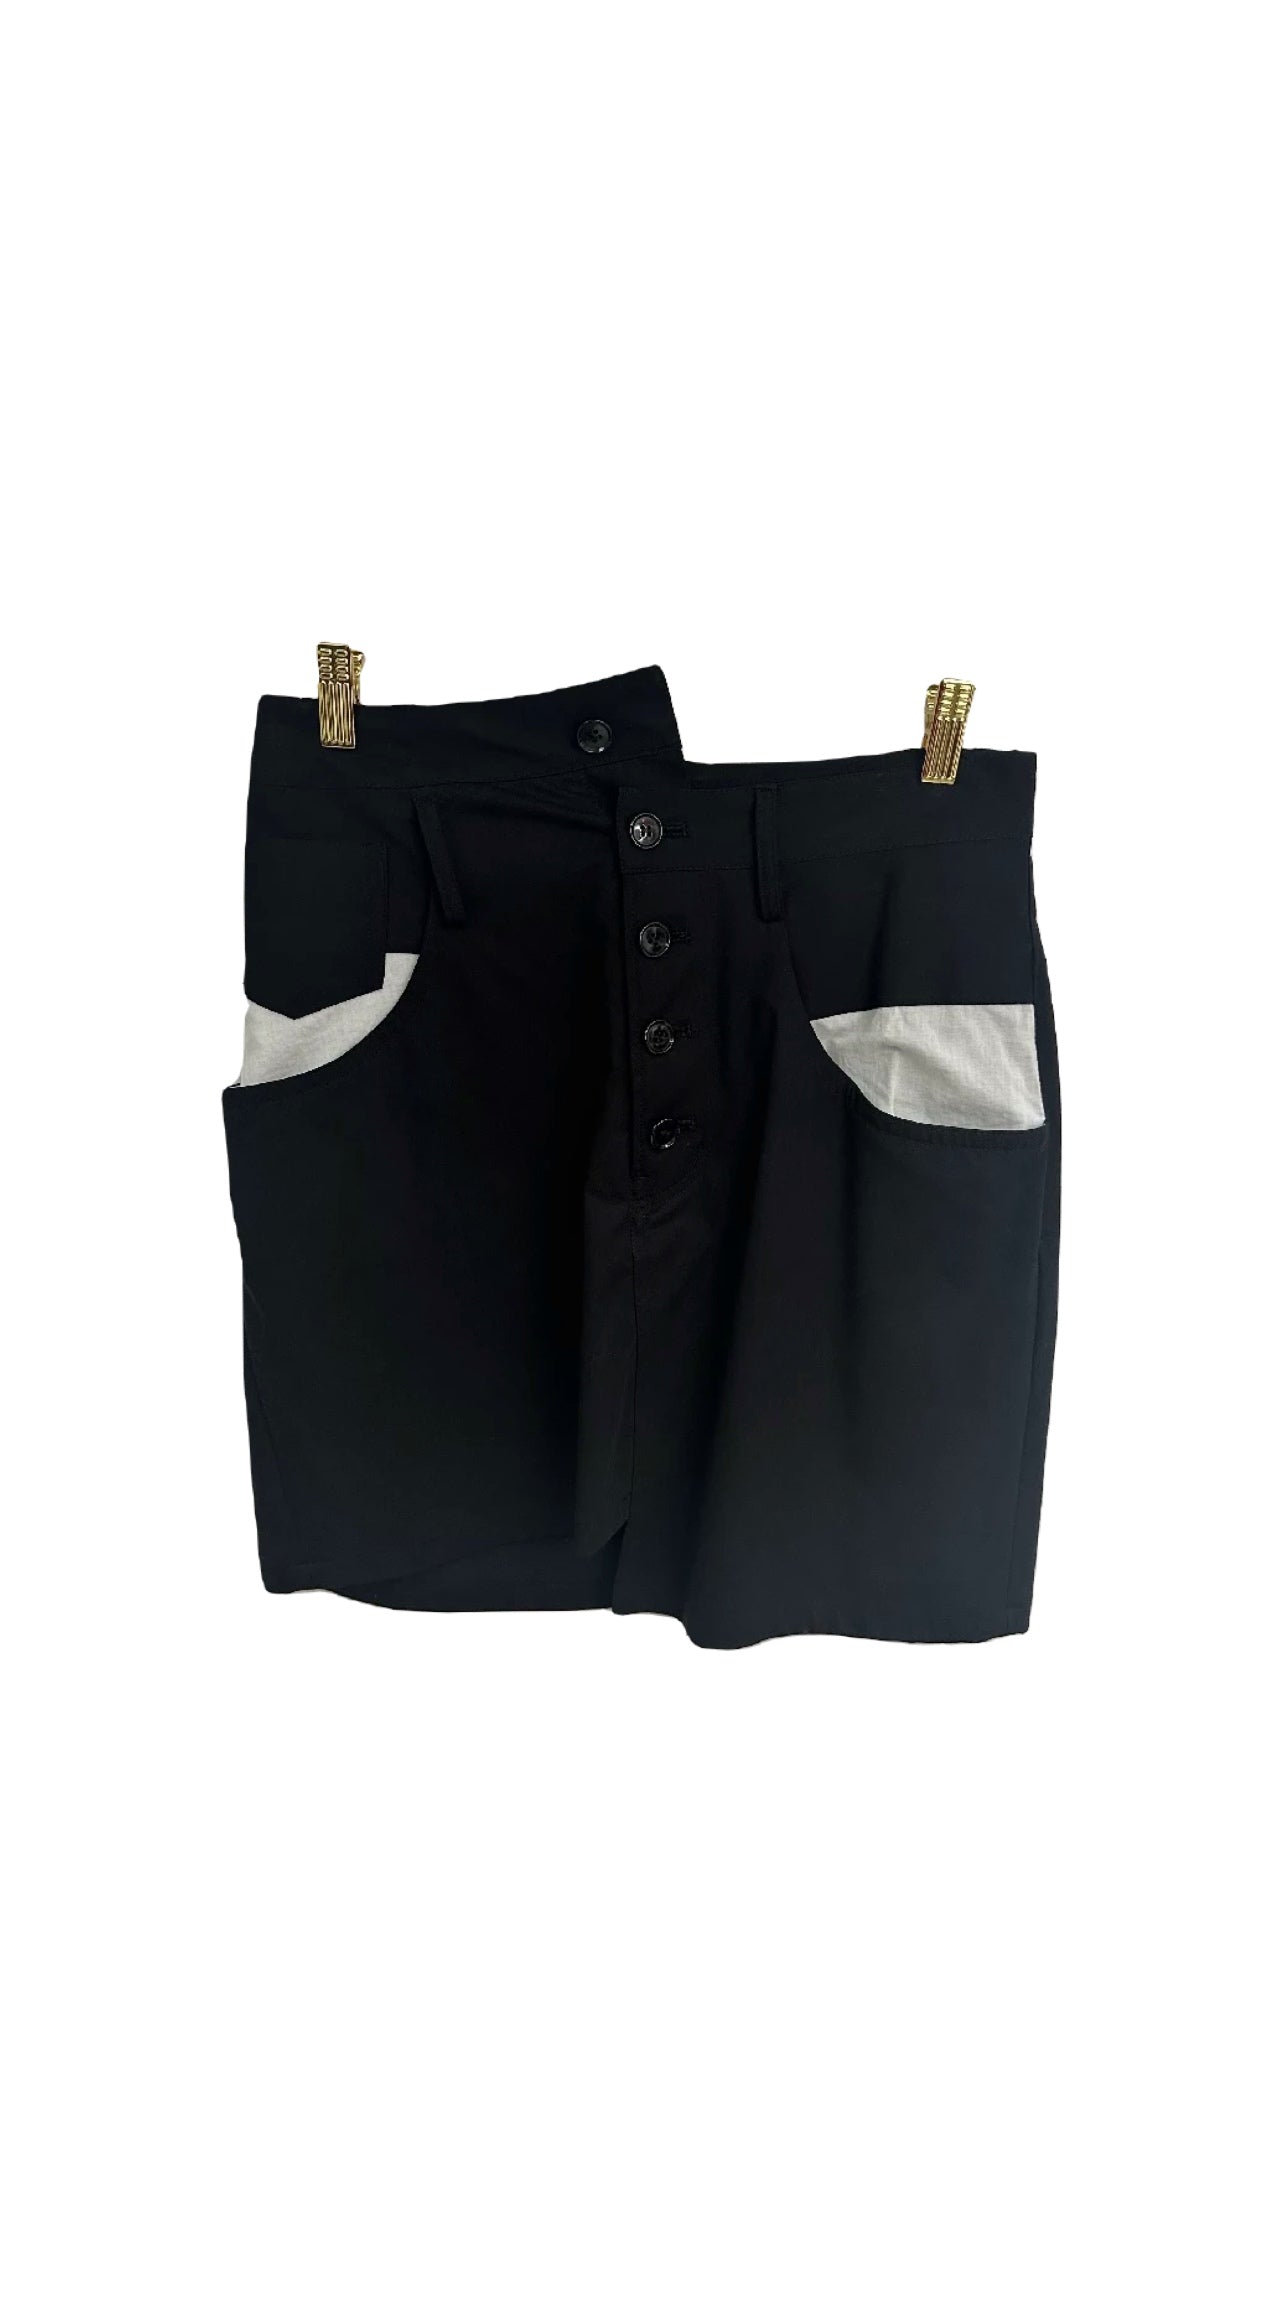 LIMI FEU Japanese Brand Asymmetrical Mini skirt w/ Tags